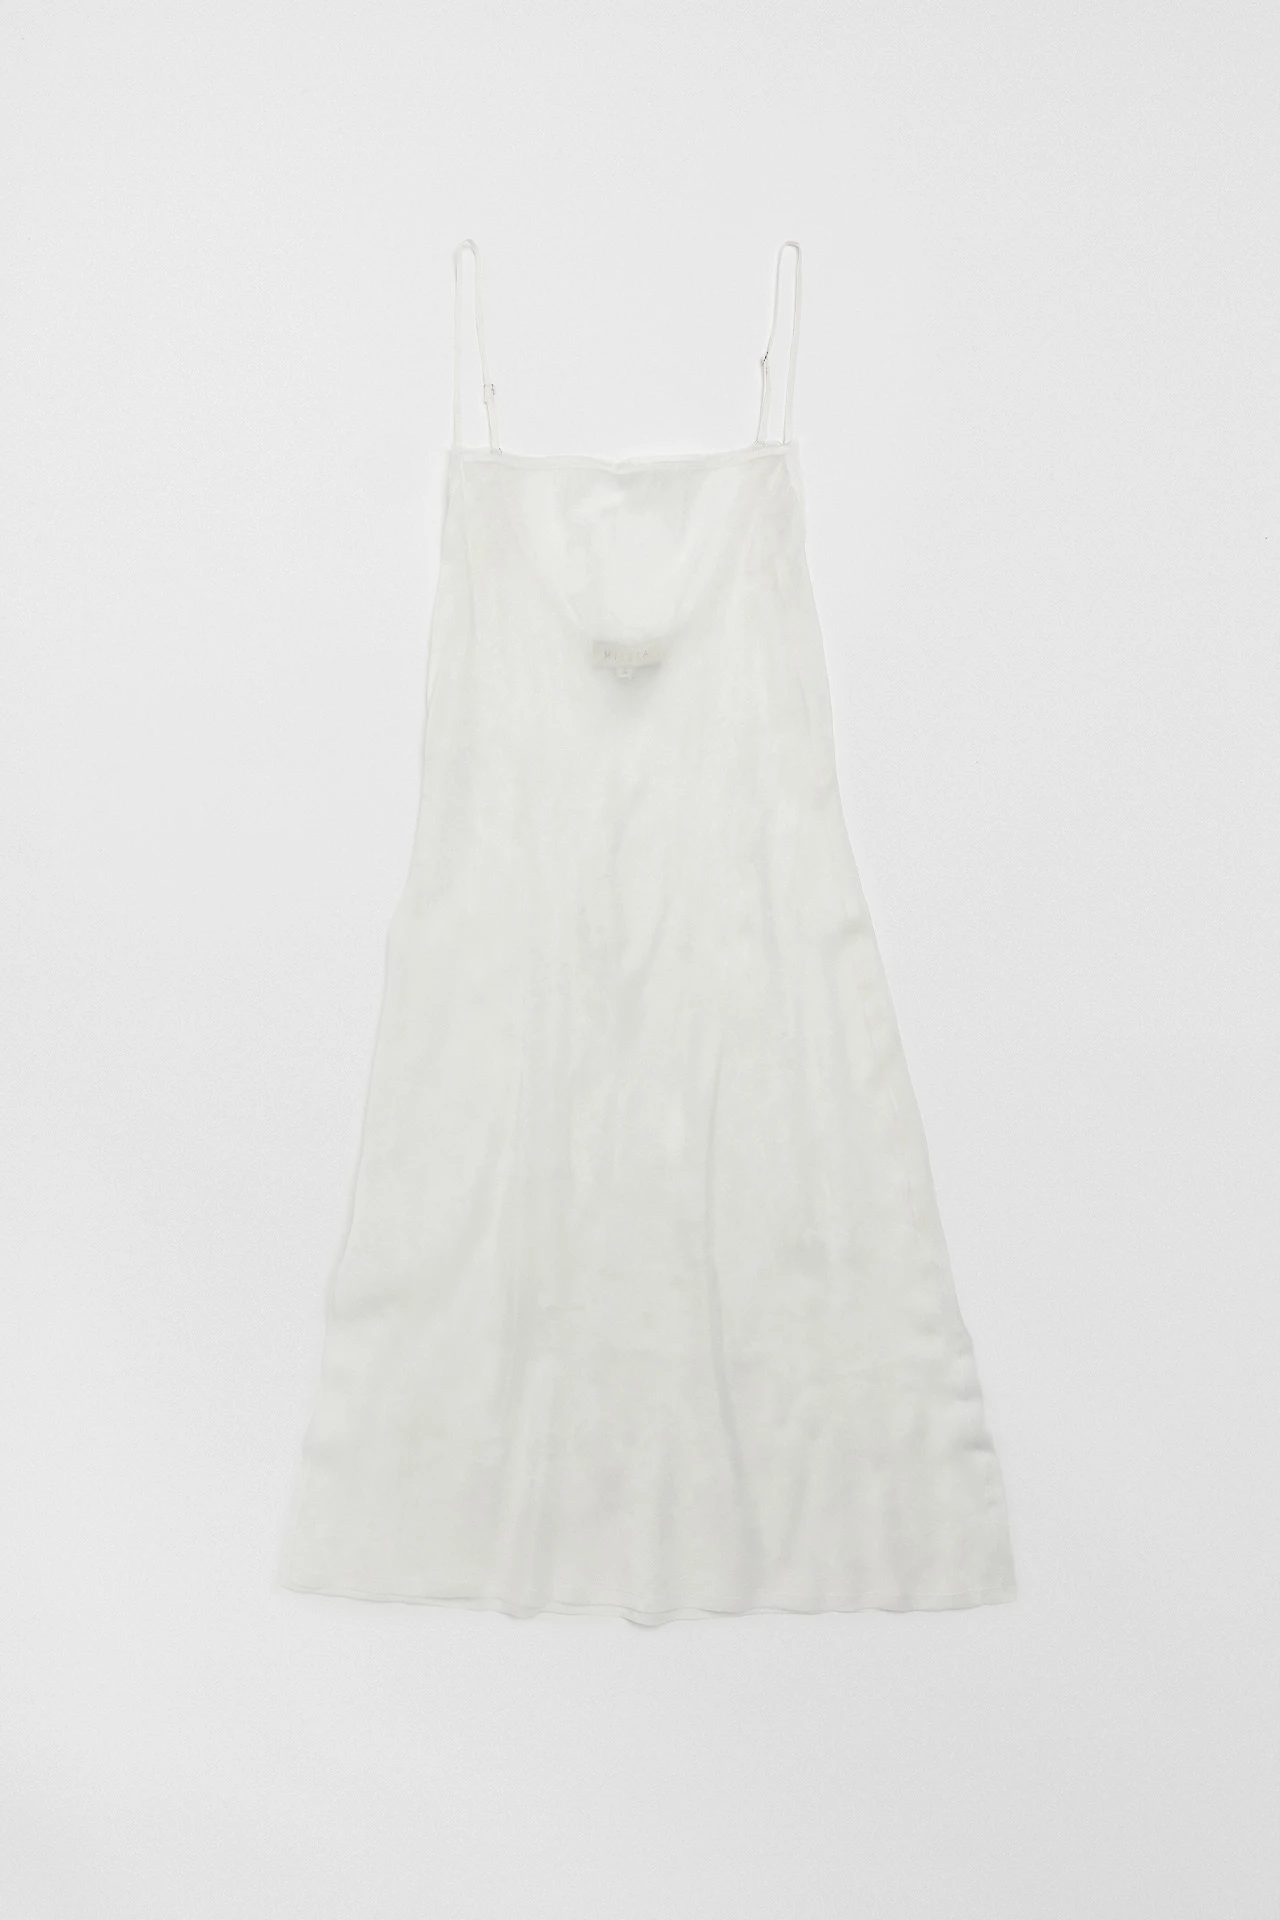 Miista-lorelay-white-dress-01